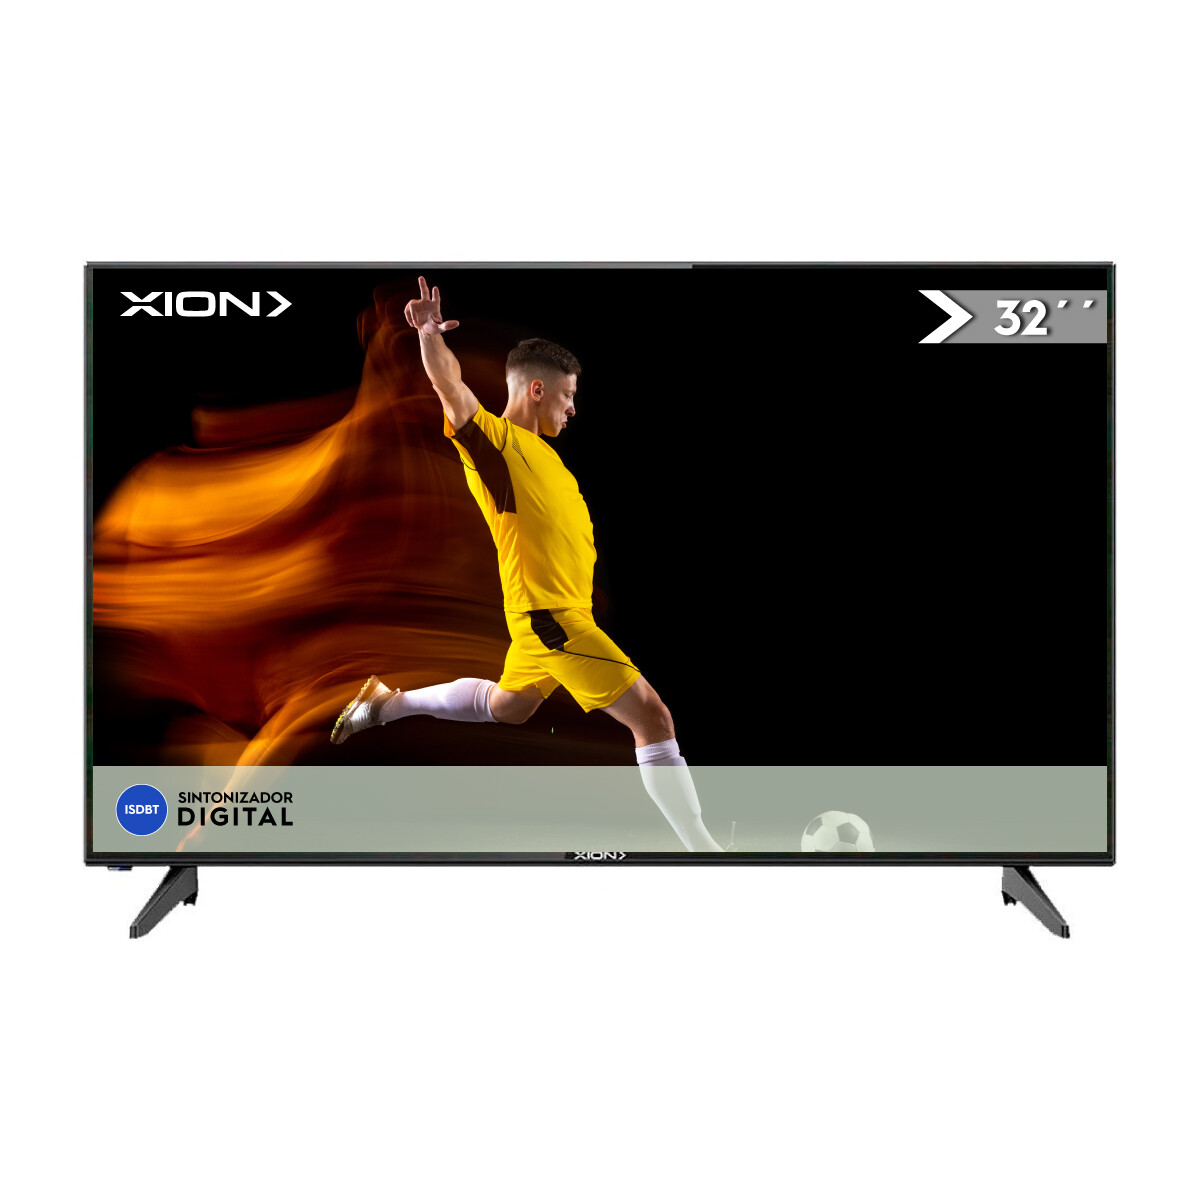 TV LED 32" XION HD (1366x768P) CON ISDBT 